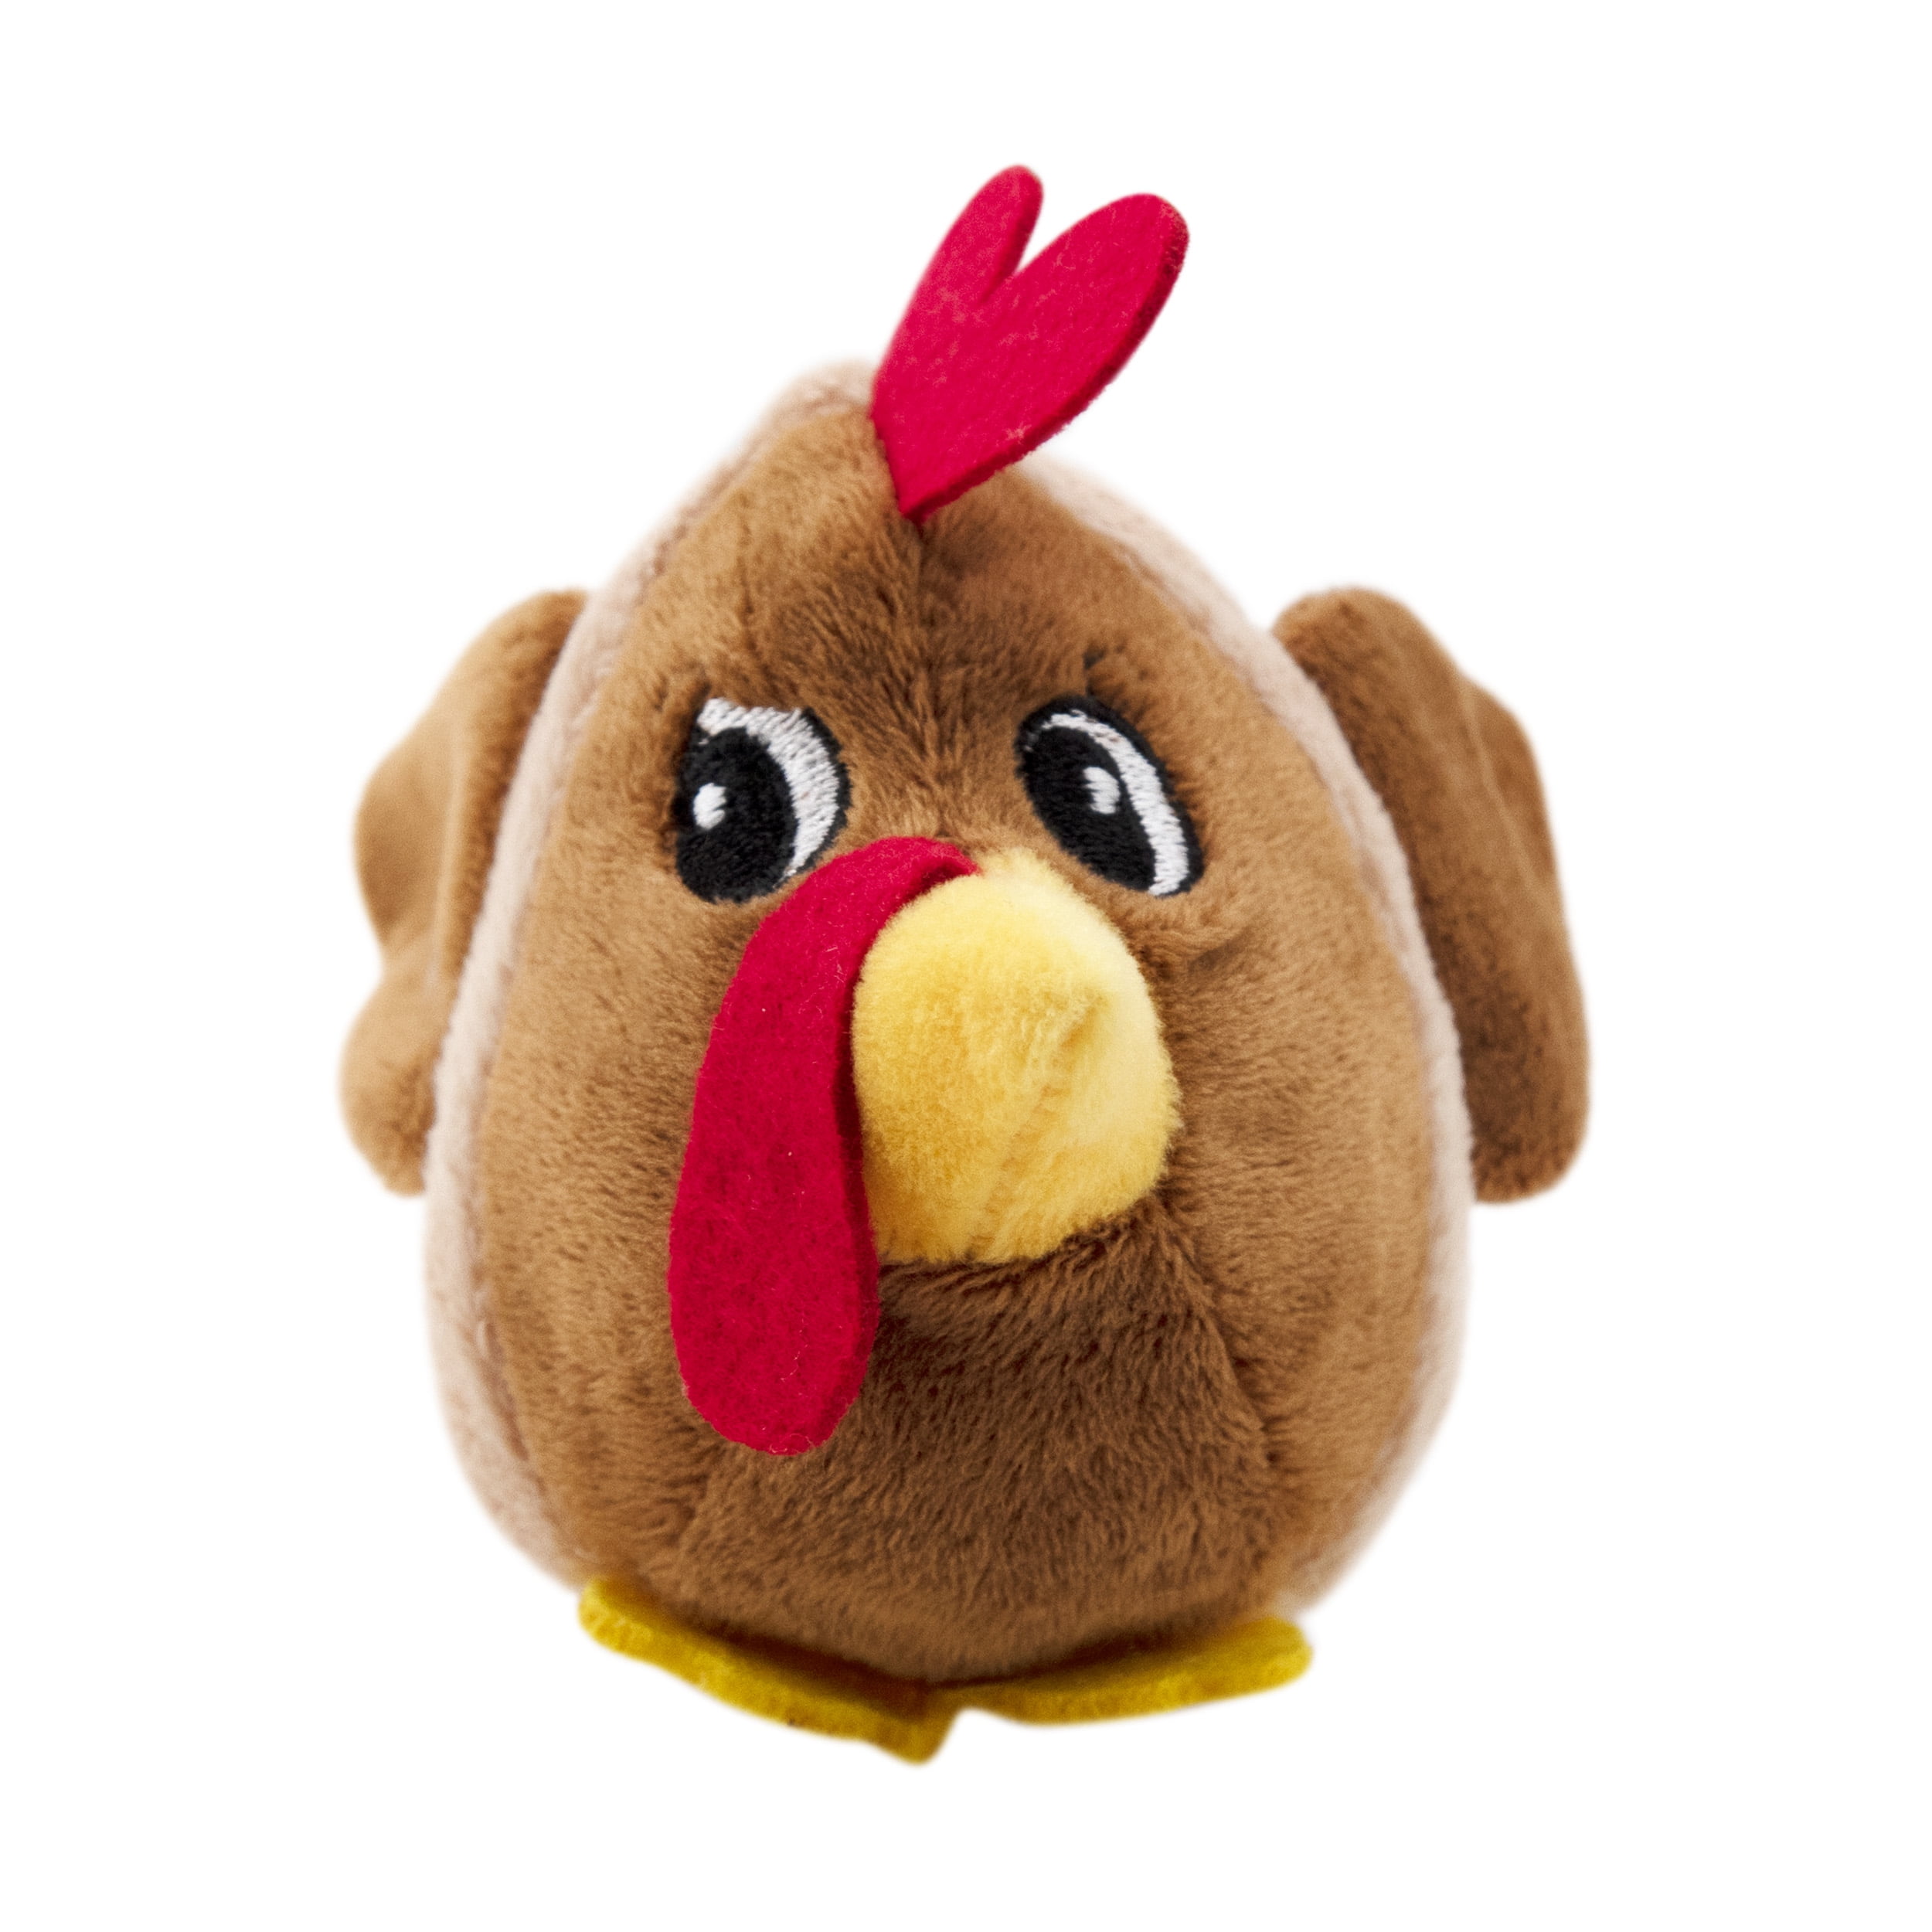 Chuckimals 'Parrot' 5 Inch Plush Soft Toy Brand New Gift 